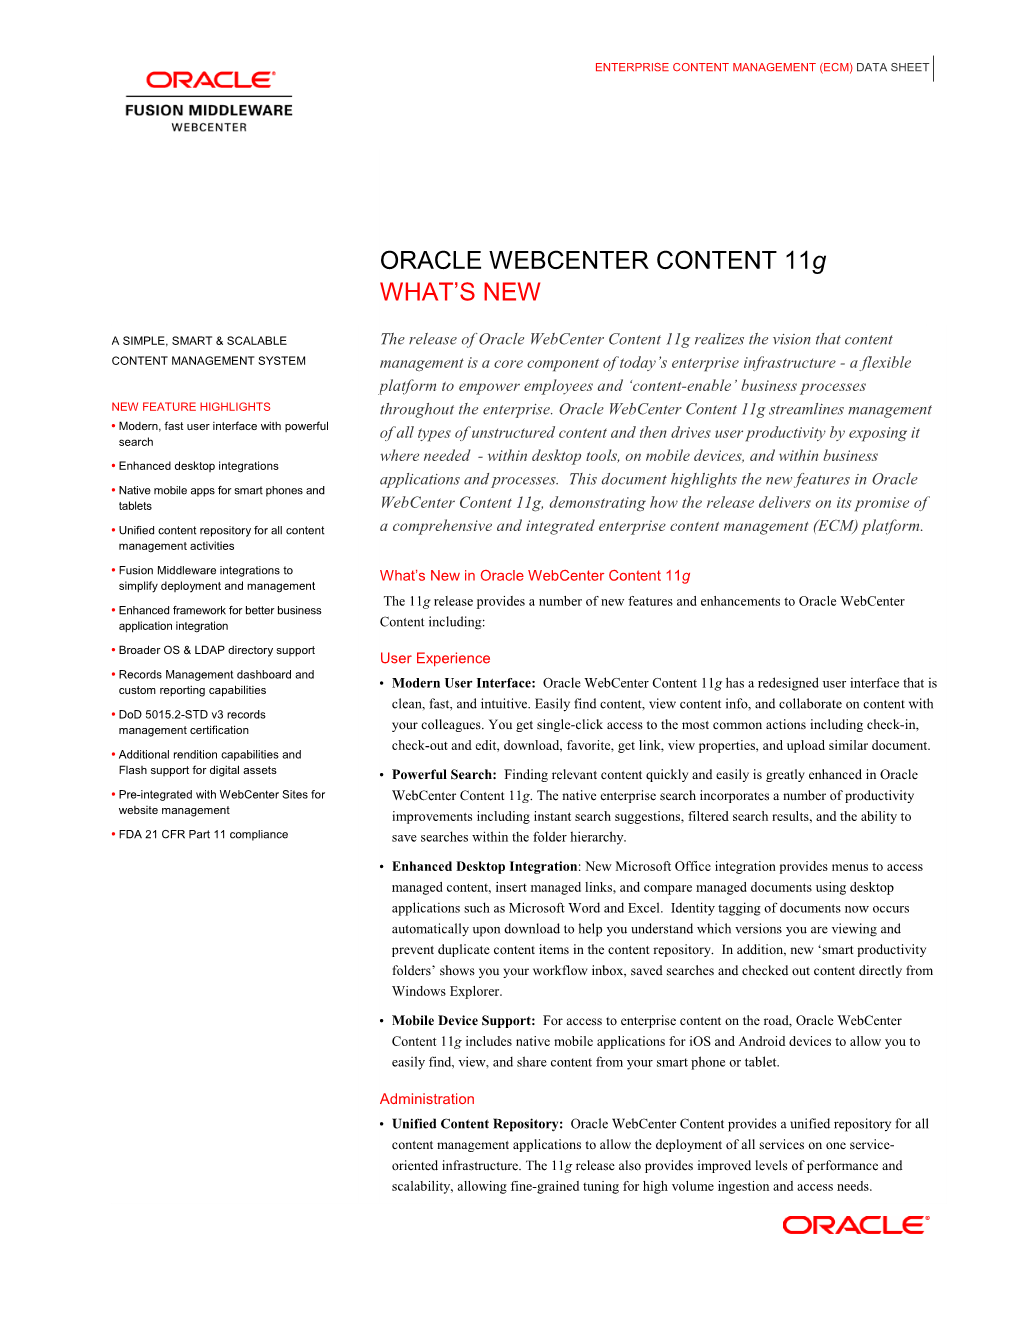 Oracle Webcenter Content 11G Datasheet